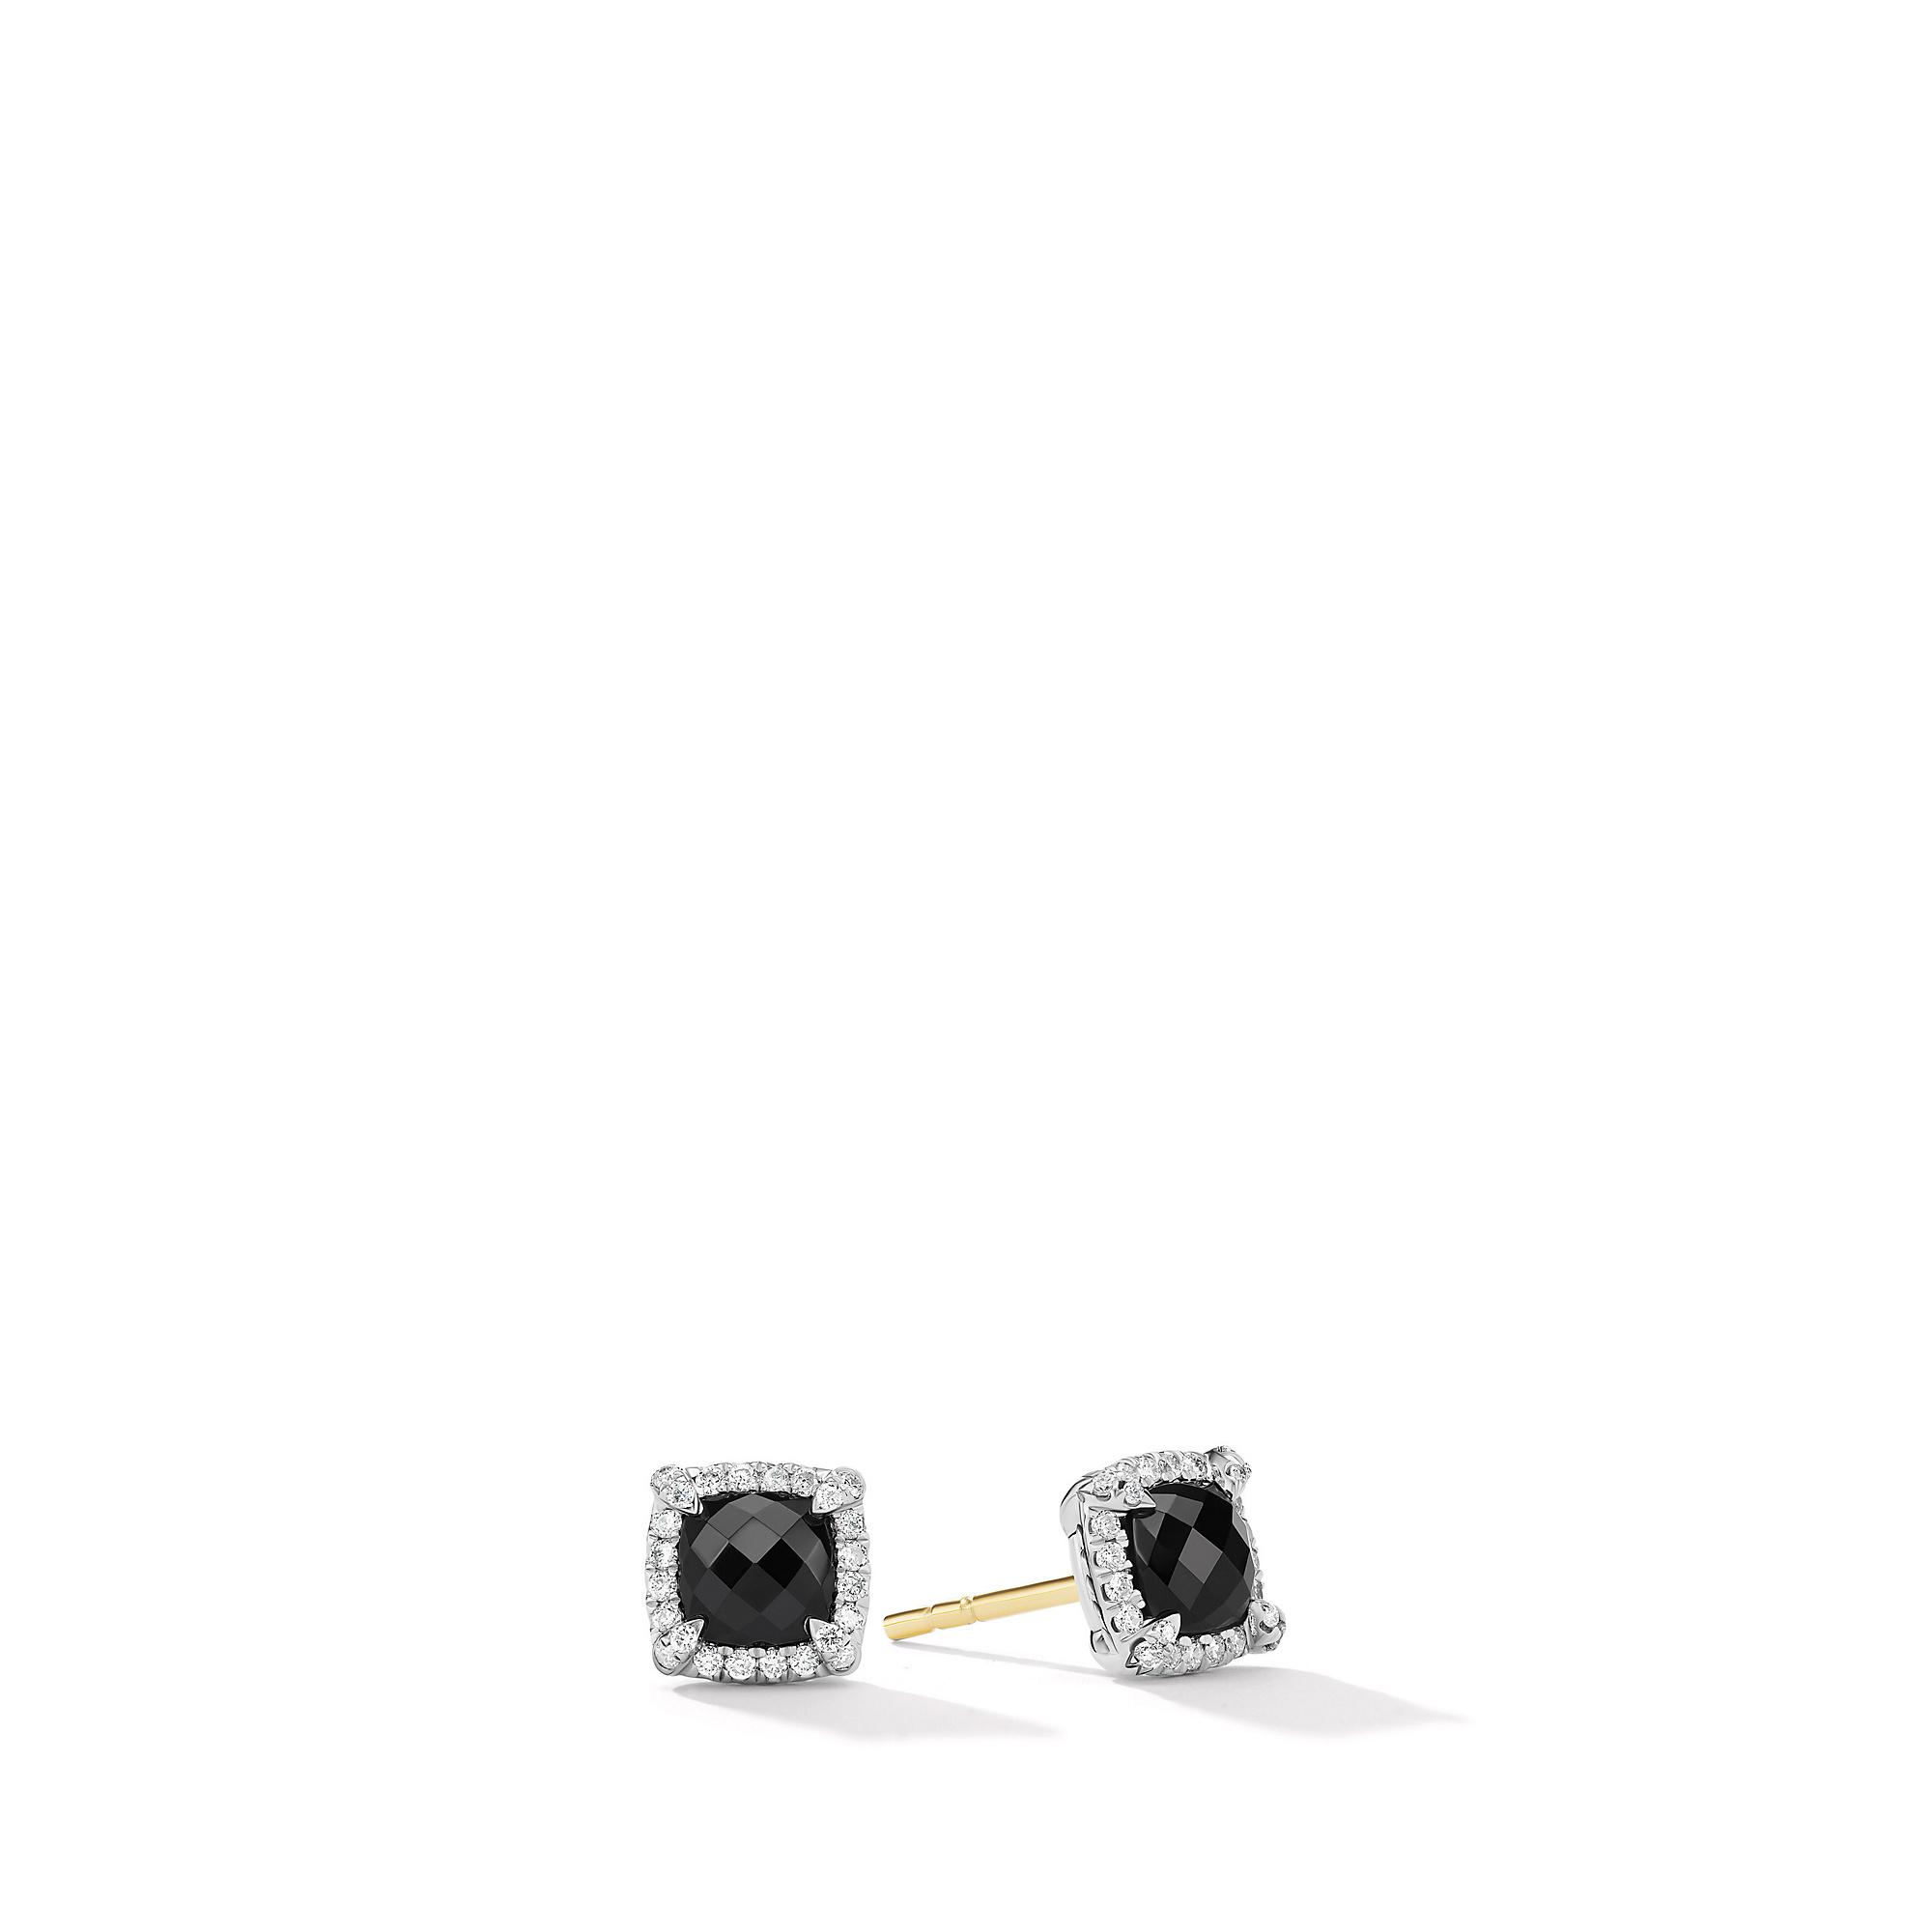 David Yurman Petite Chatelaine Pave Bezel Stud Earrings with Black Onyx and Diamonds